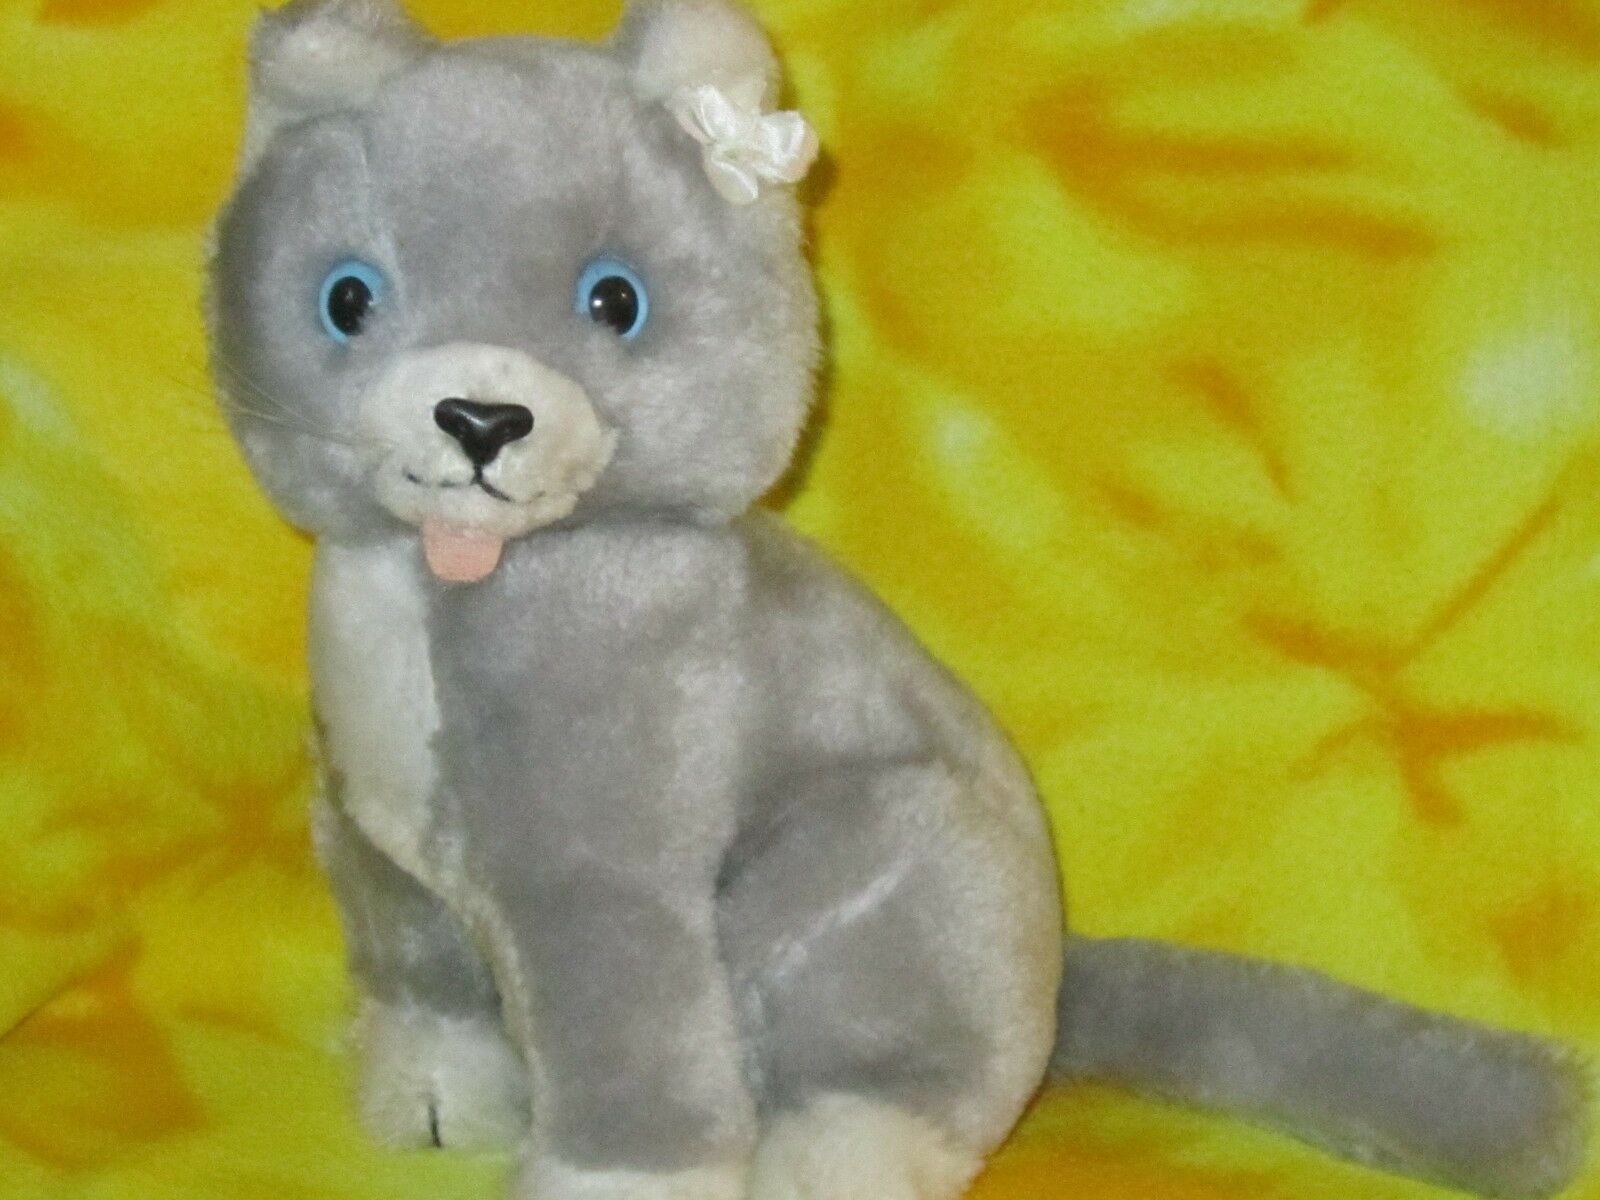 10"  Vintage 1977 Dakin Plush Gray & White Kitty Cat W/ Felt Tongue Toy Animal